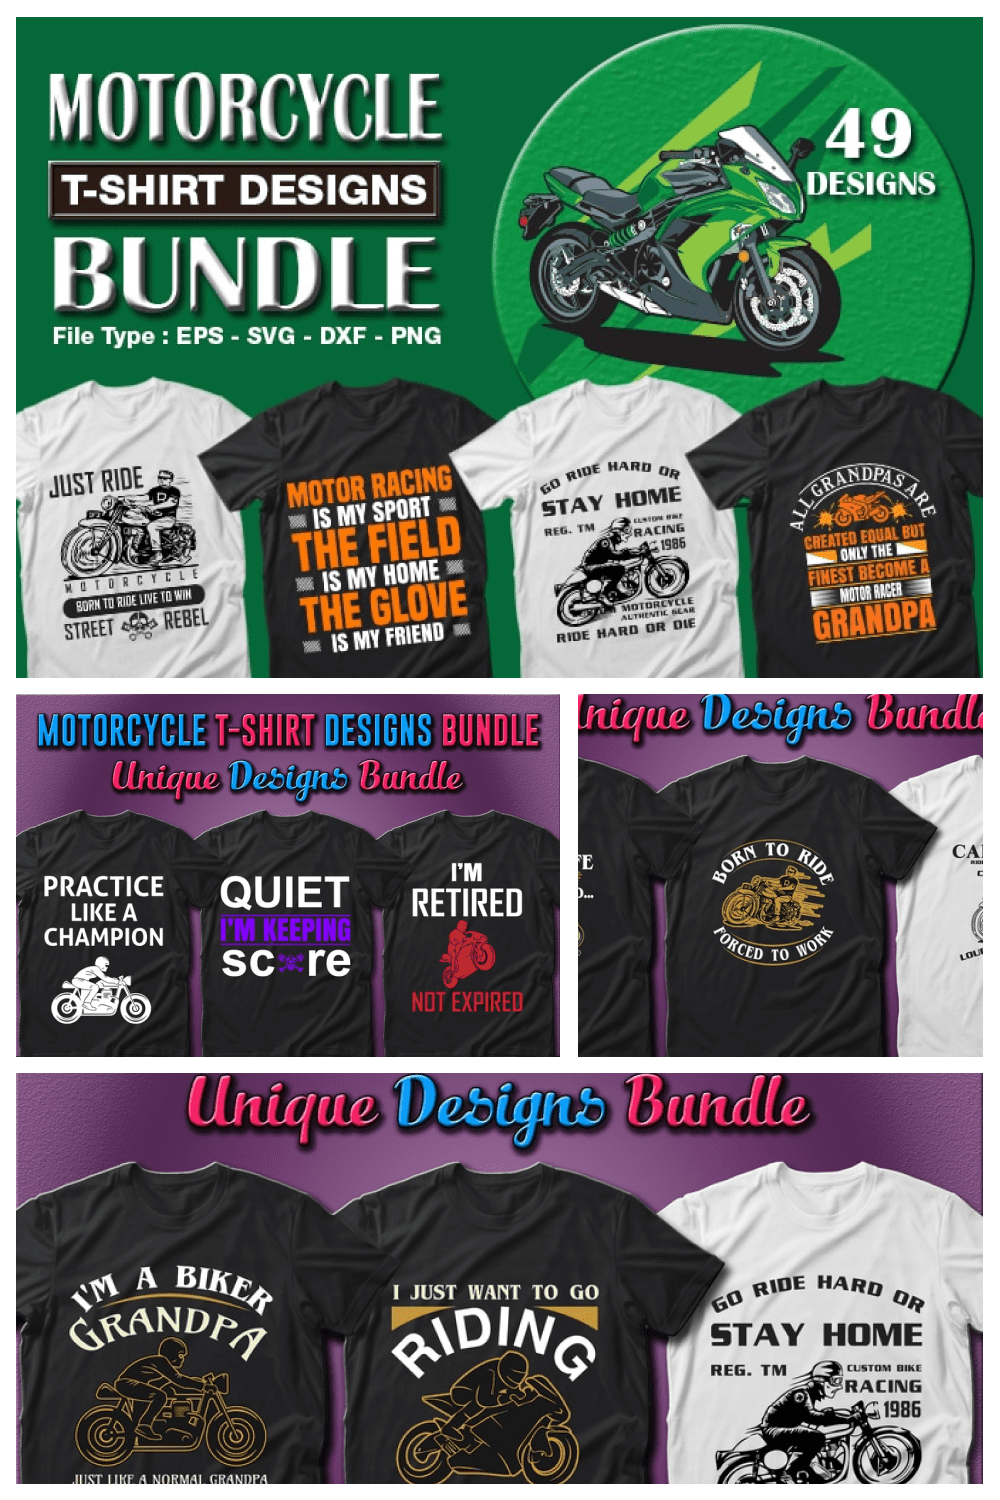 Best Selling 49 Motorcycle T-shirt Designs Bundle - MasterBundles - Pinterest Collage Image.